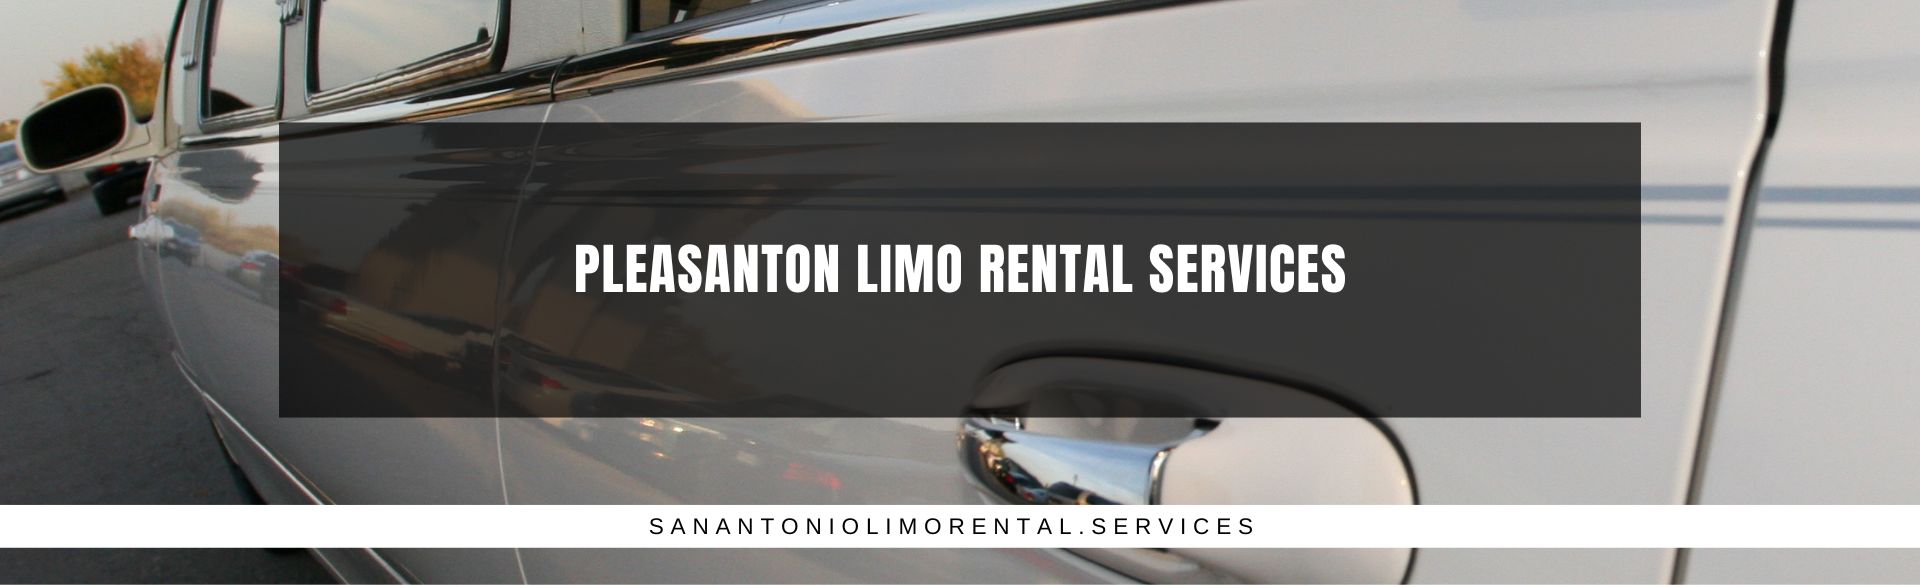 Pleasanton Limo Rental Services